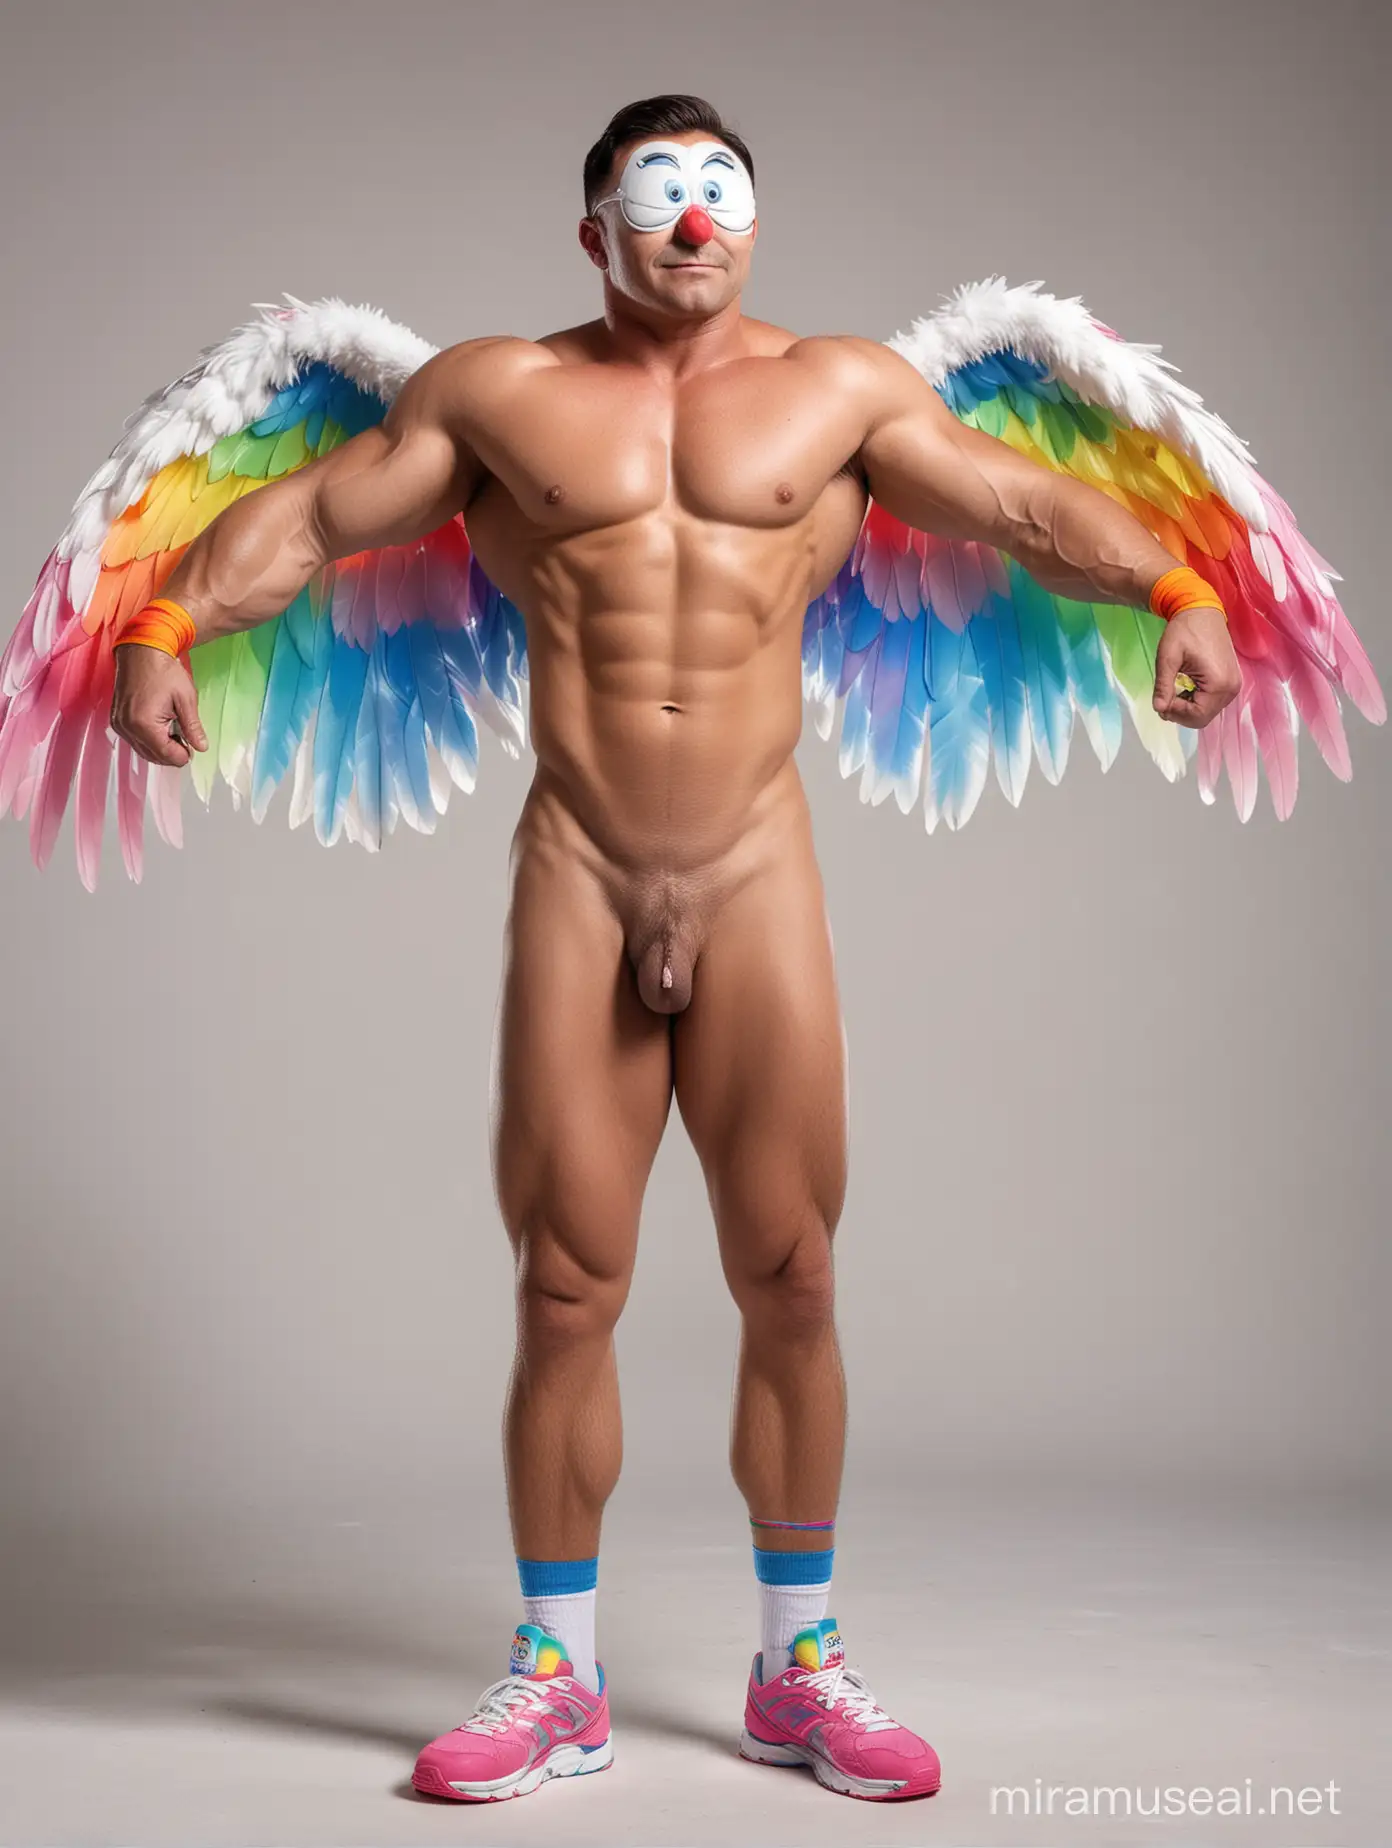 Muscular 40s Bodybuilder Flexing in Colorful Rainbow Wings Jacket